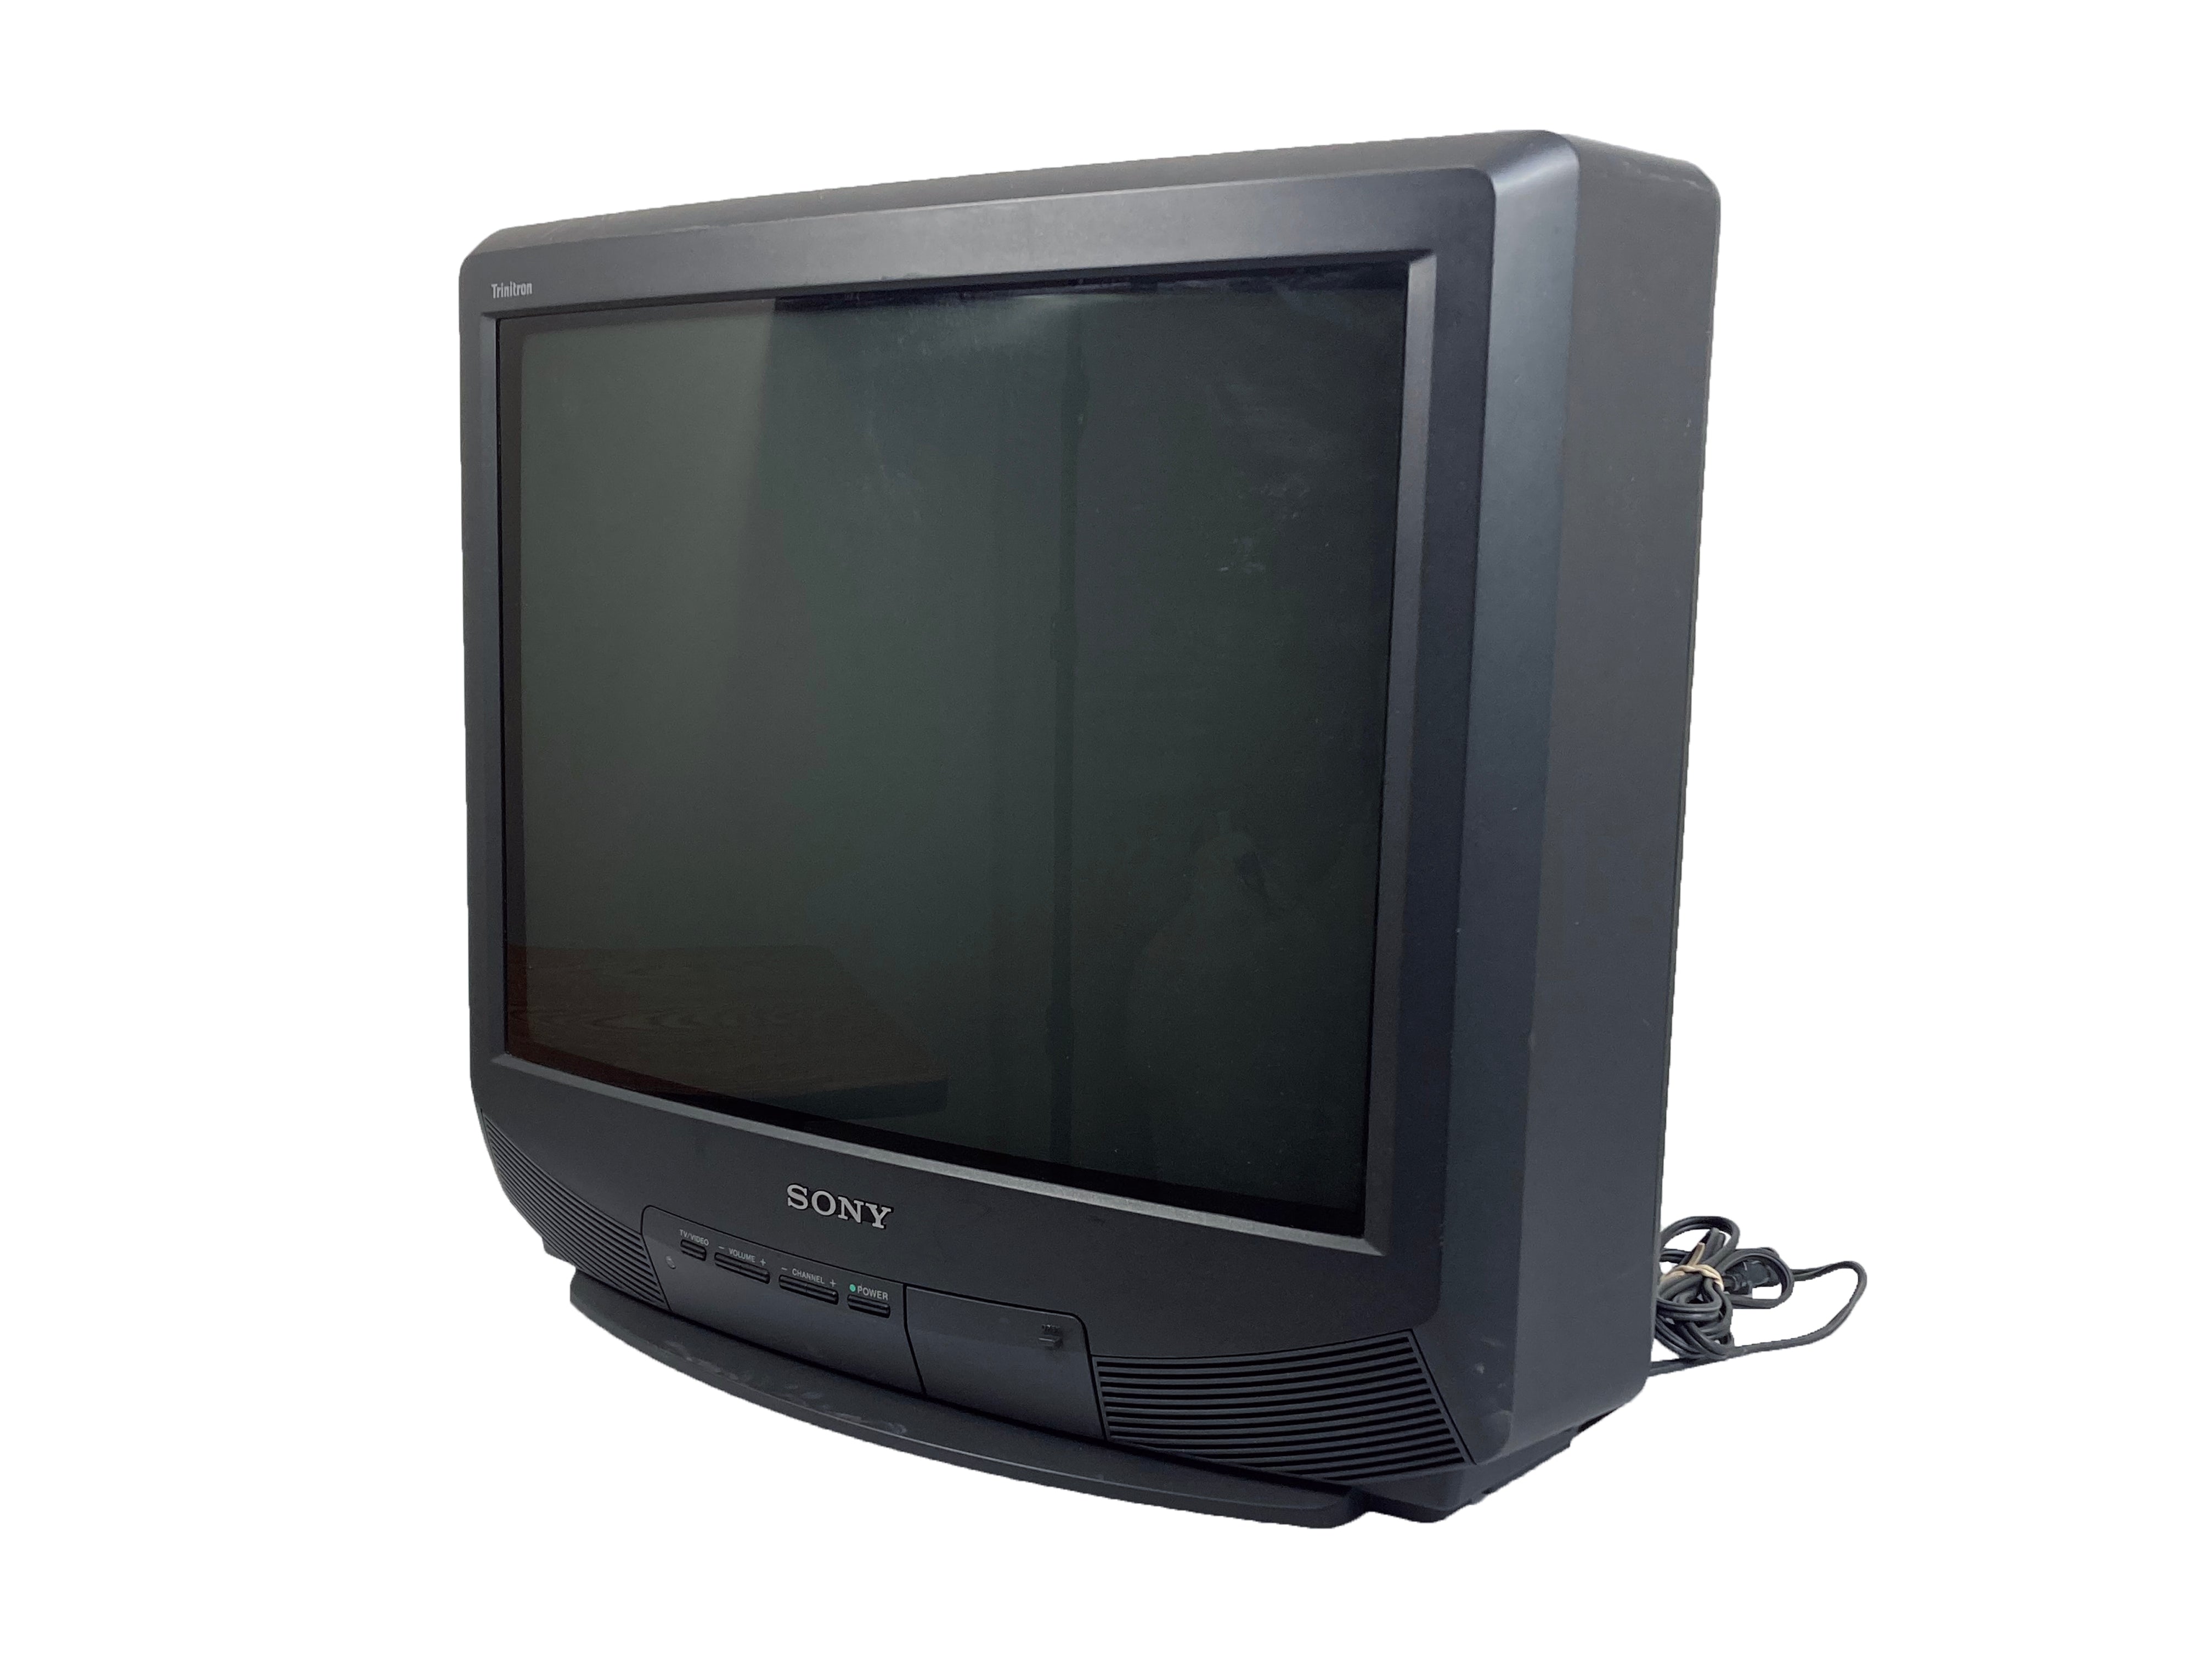  Sony KV-20FV12 20 Trinitron Wega TV de pantalla plana :  Electrónica